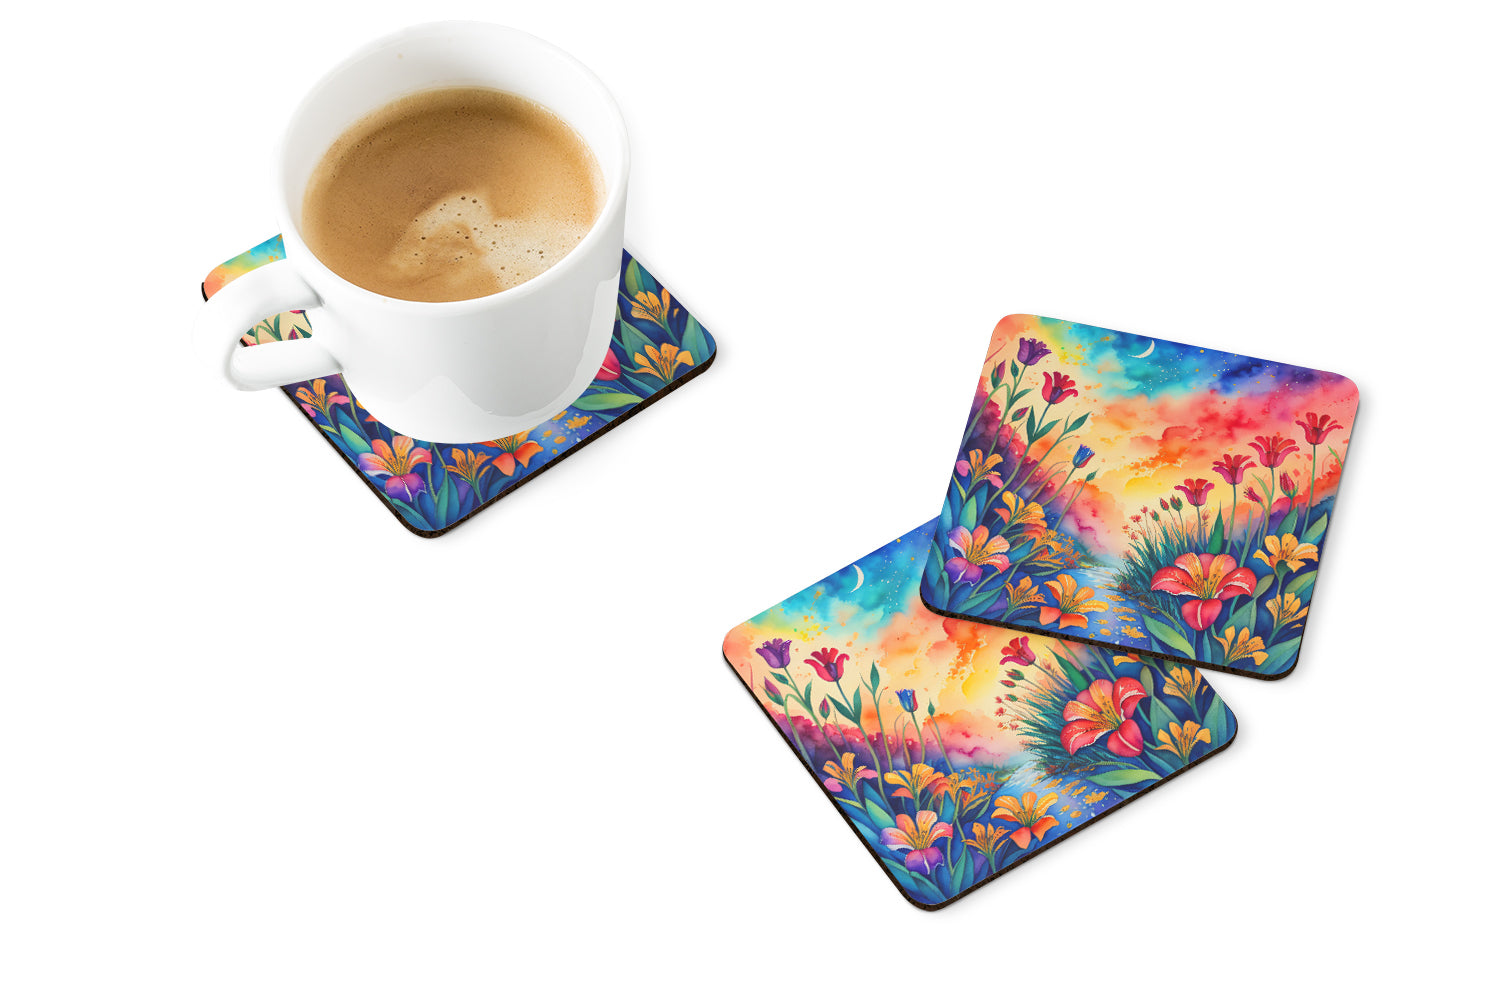 Colorful Alstroemerias Foam Coaster Set of 4